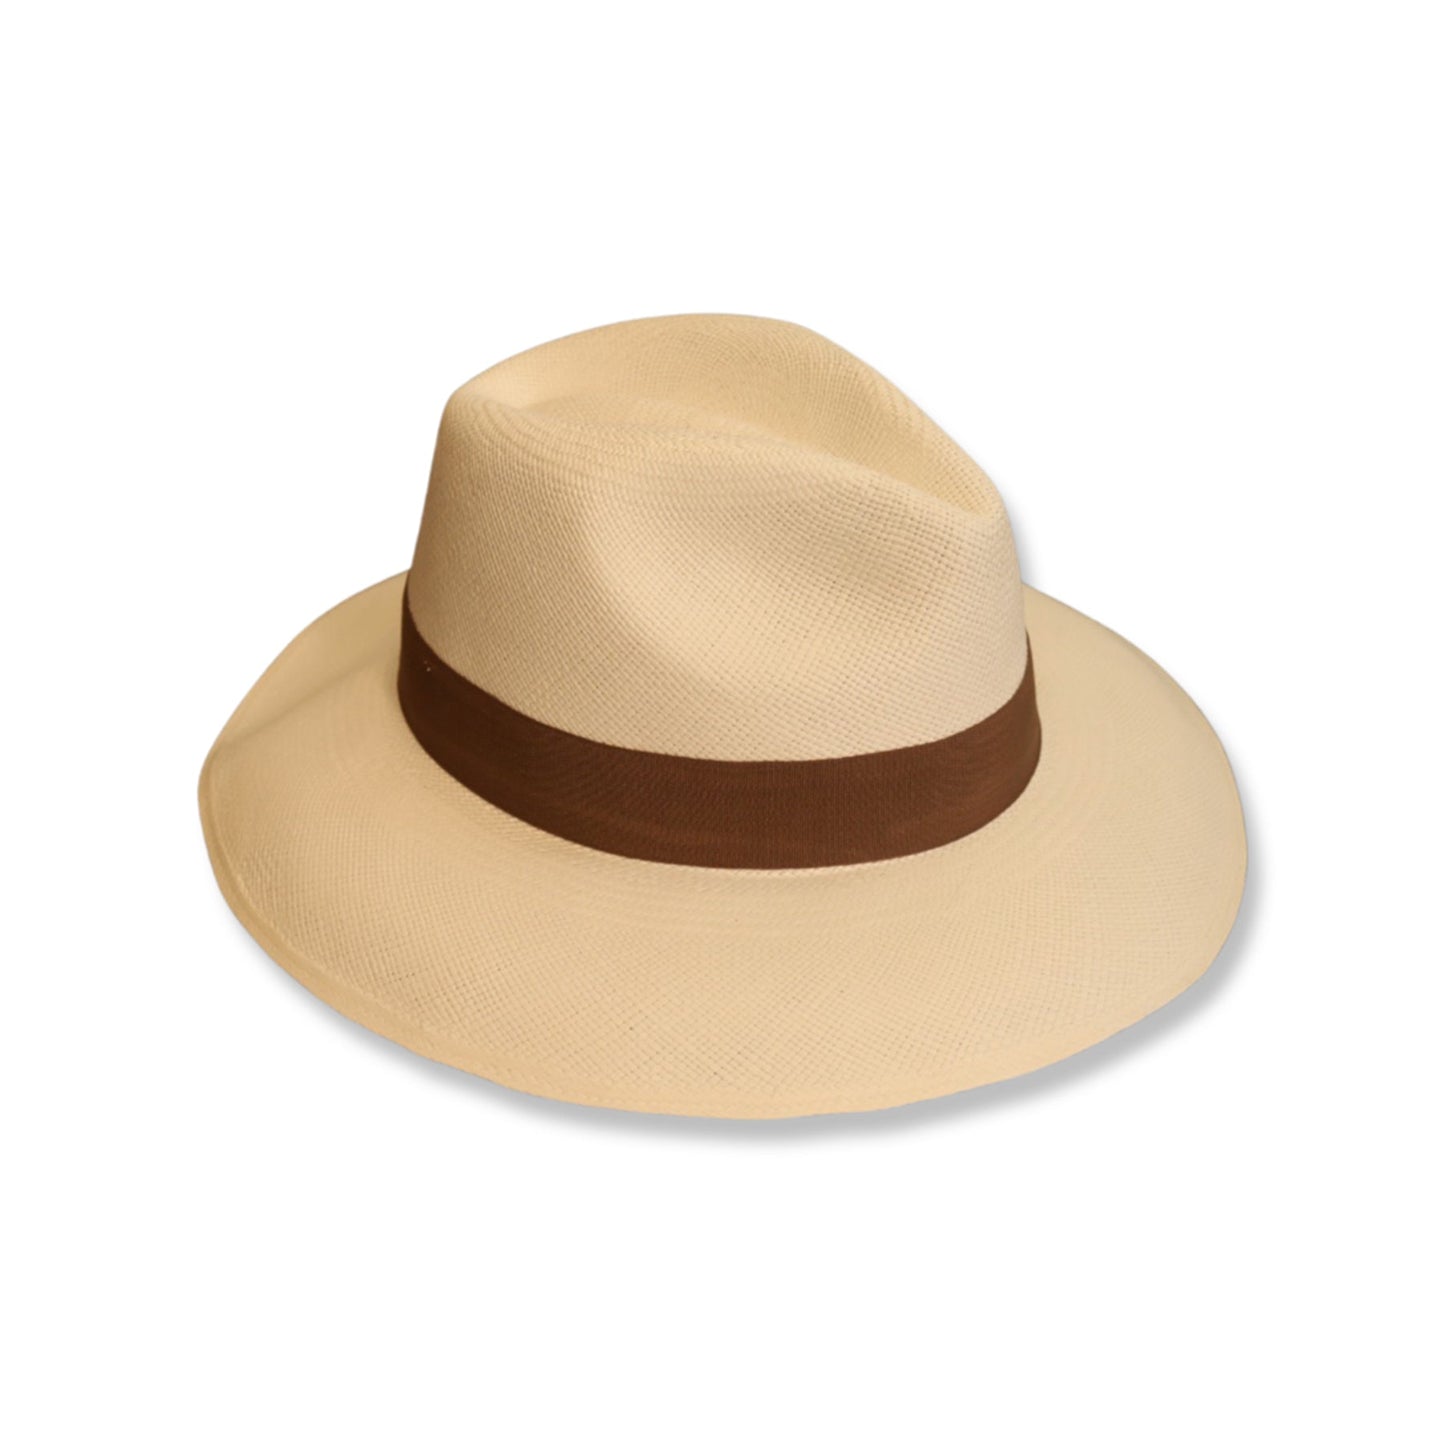 Panama Hat - Premium Accessories from Marina St Barth - Just $140! Shop now at Marina St Barth